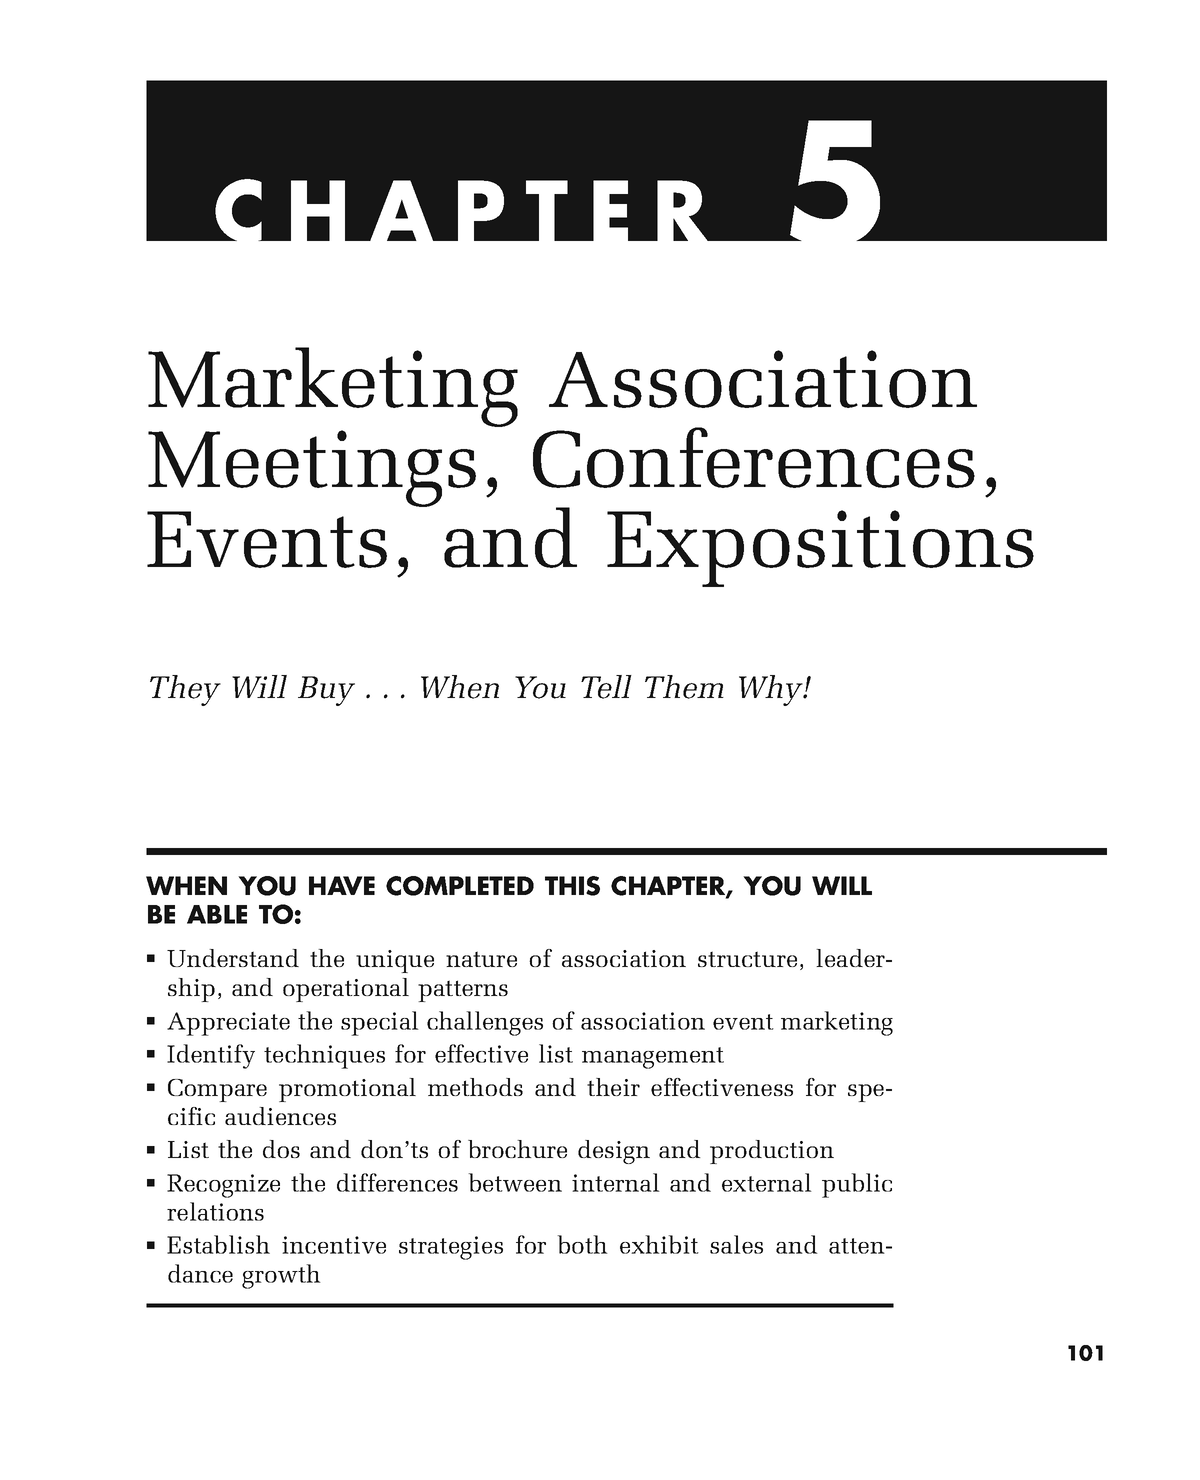 event marketing thesis topics